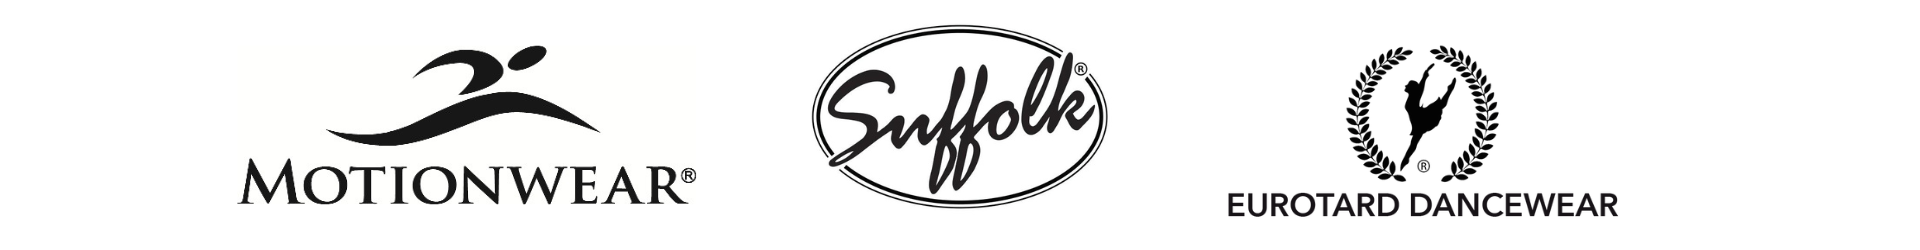 motionwear, suffolk and eurotard logos